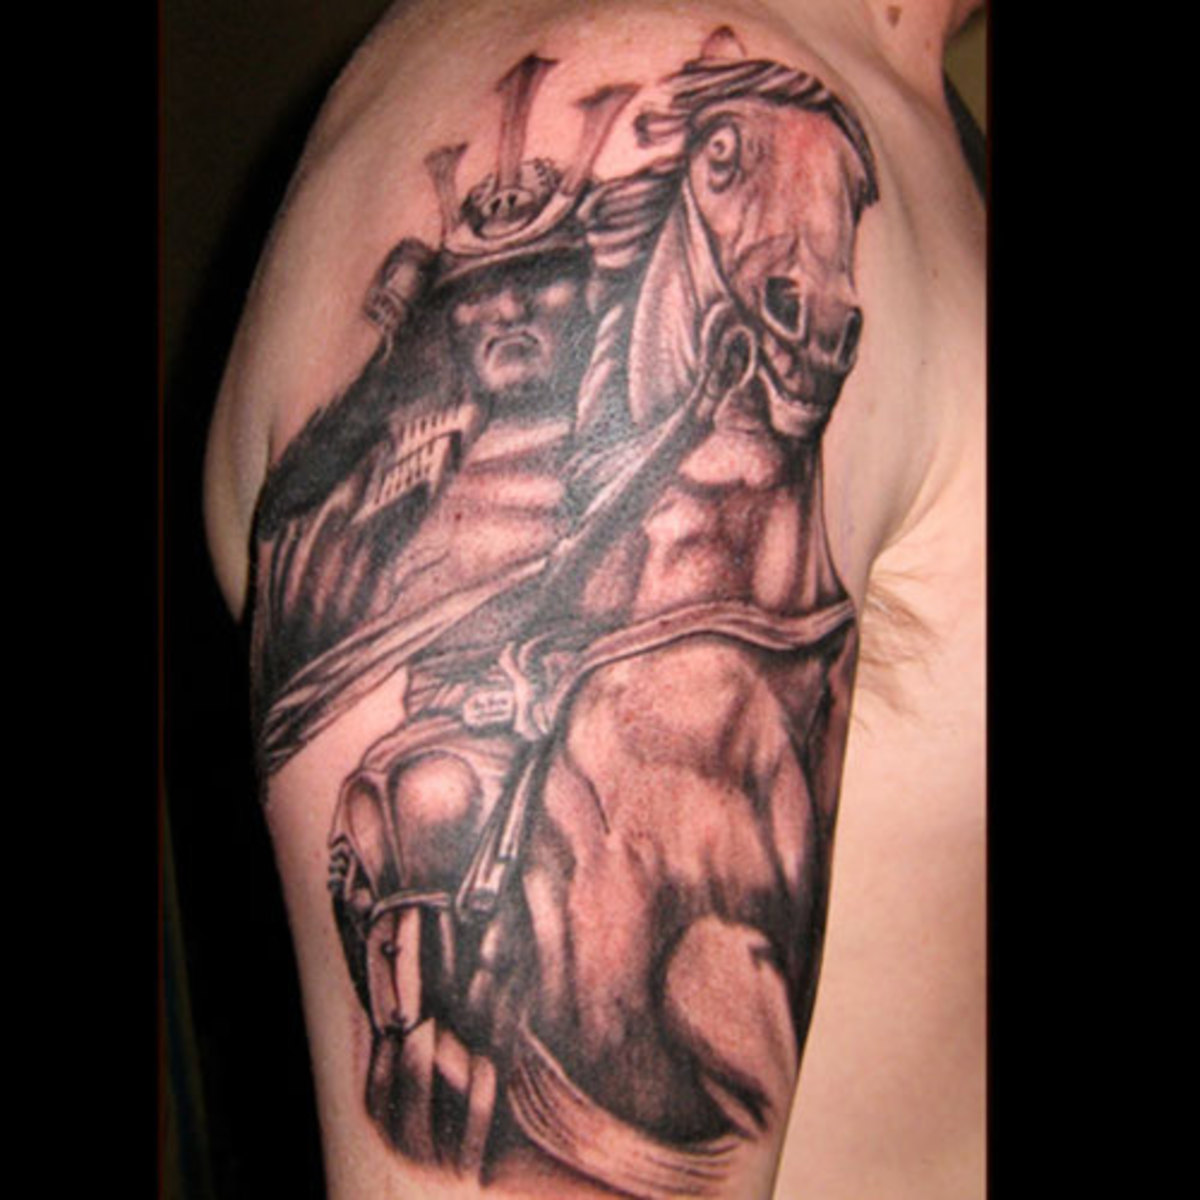 An impressive tattoo of a Samurai warrior on horseback.